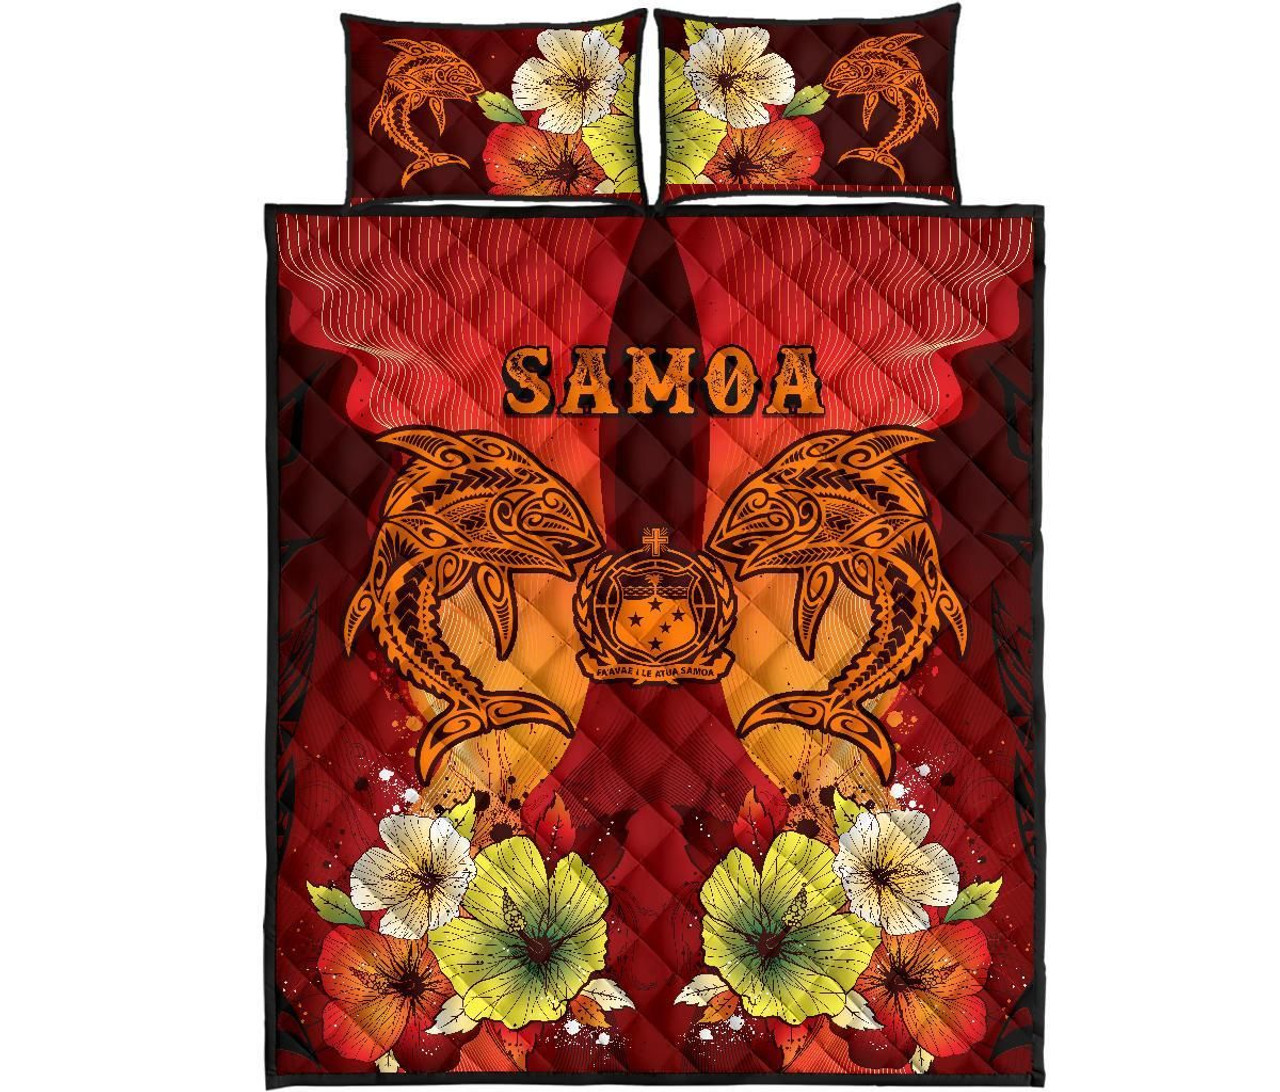 Samoa Quilt Bed Sets - Tribal Tuna Fish 3